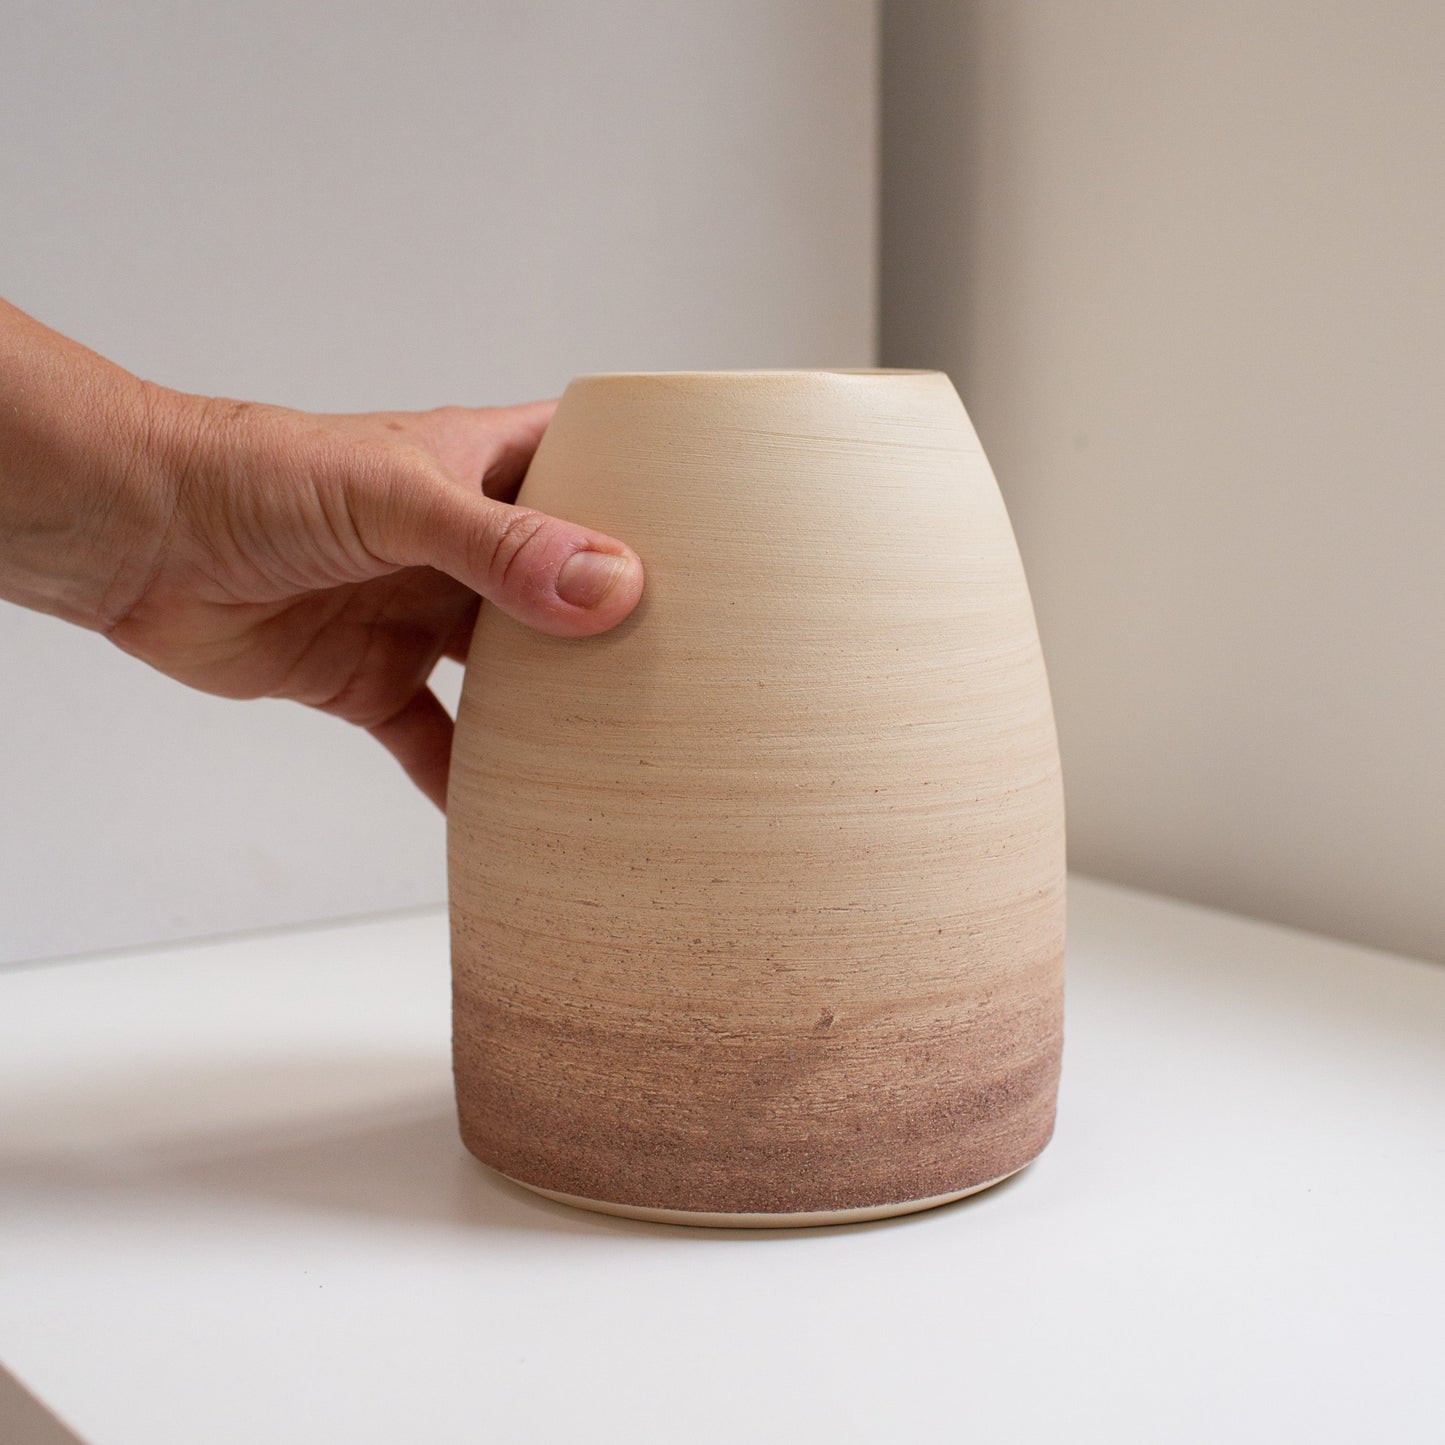 Muriwai Wild Clay Vase #2